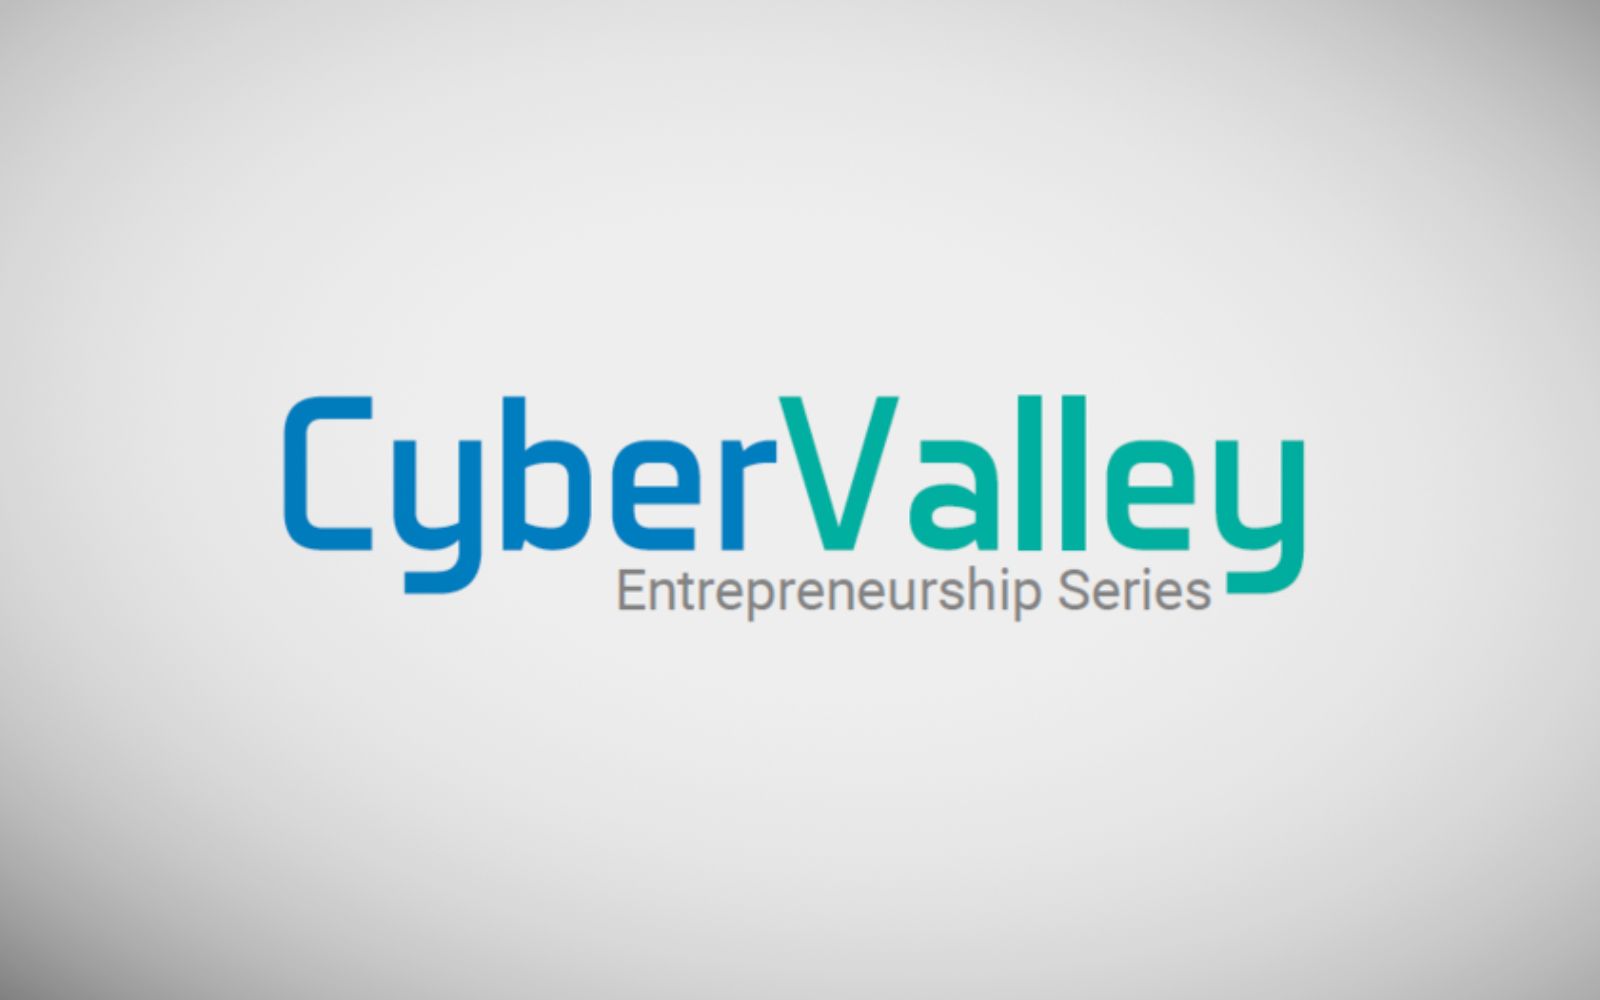 Textuelles Logo der Entrepreneurship Series des Cyber Valley.